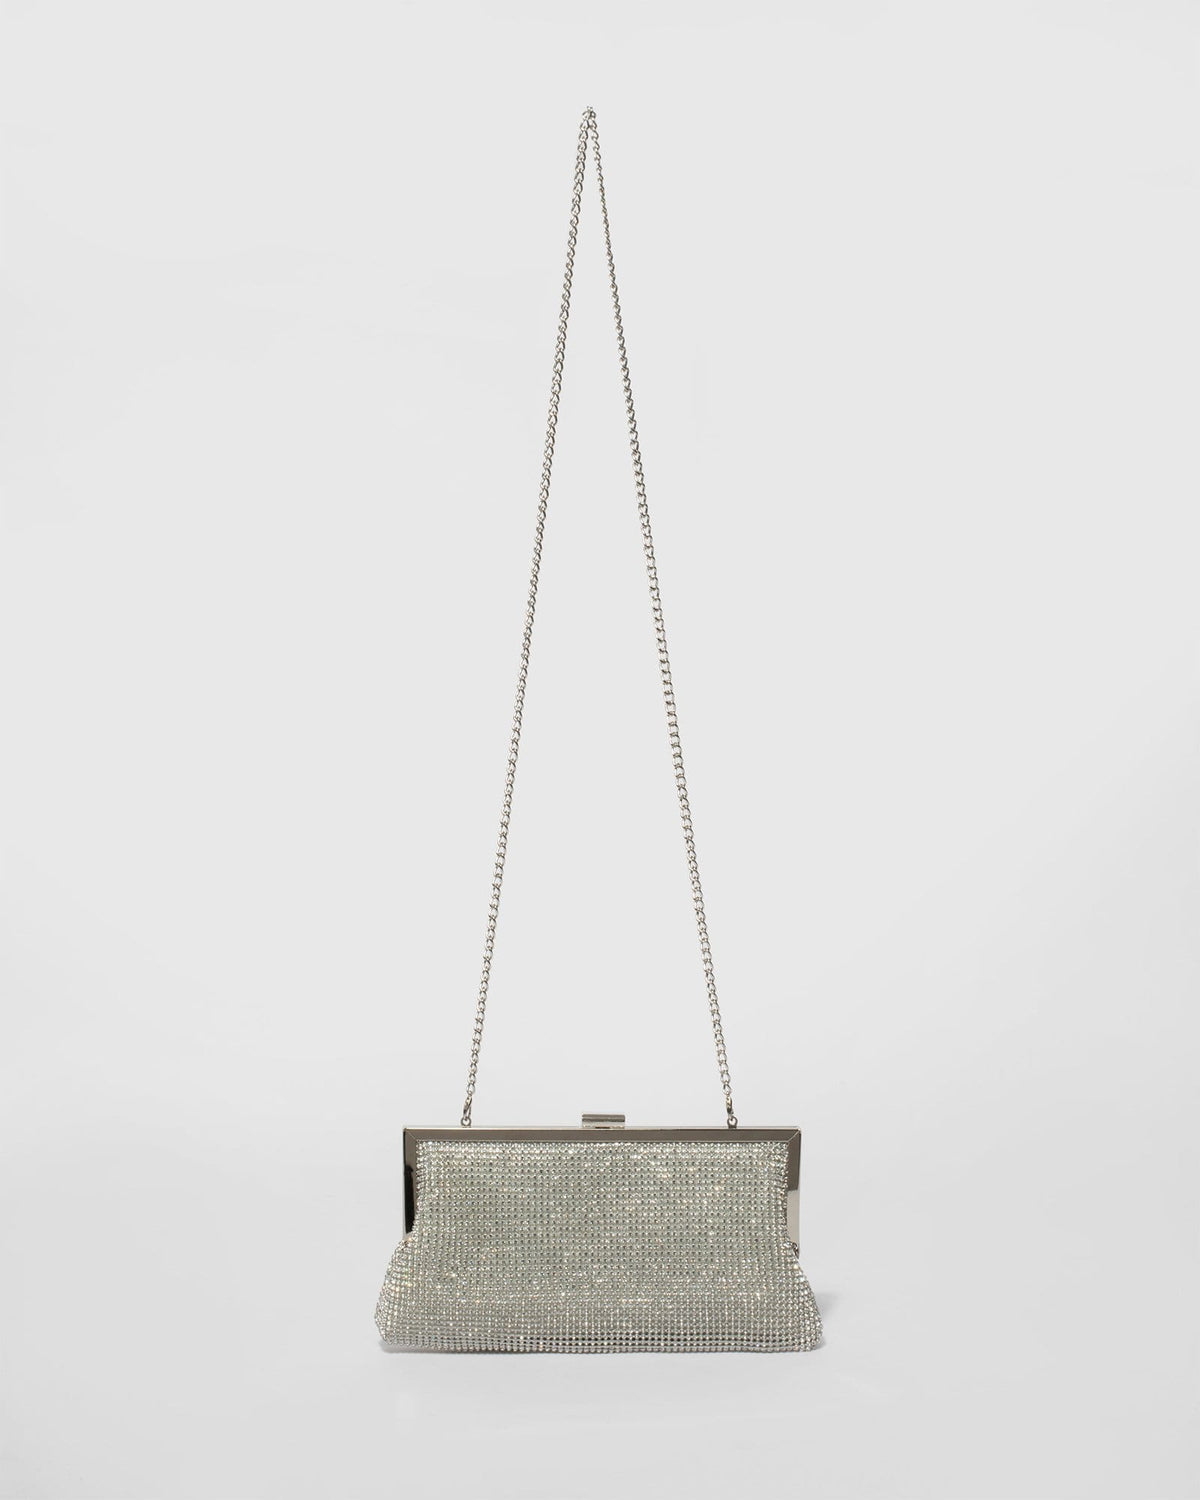 Silver Clutch Bag – colette by colette hayman